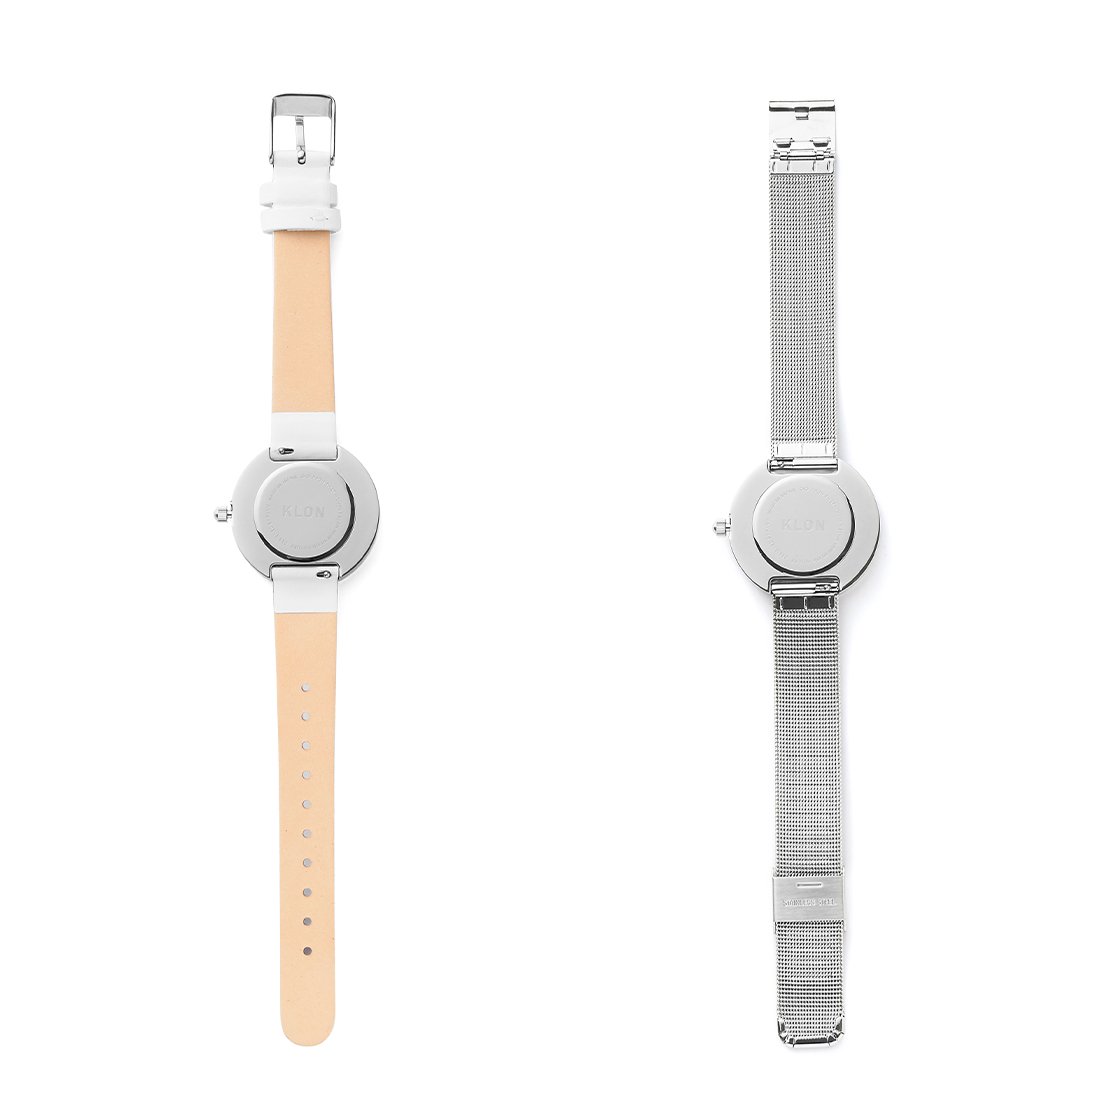 KLON INFINITY STAIR series -RONDO TIME- [36/W-FACE] カジュアル 腕時計